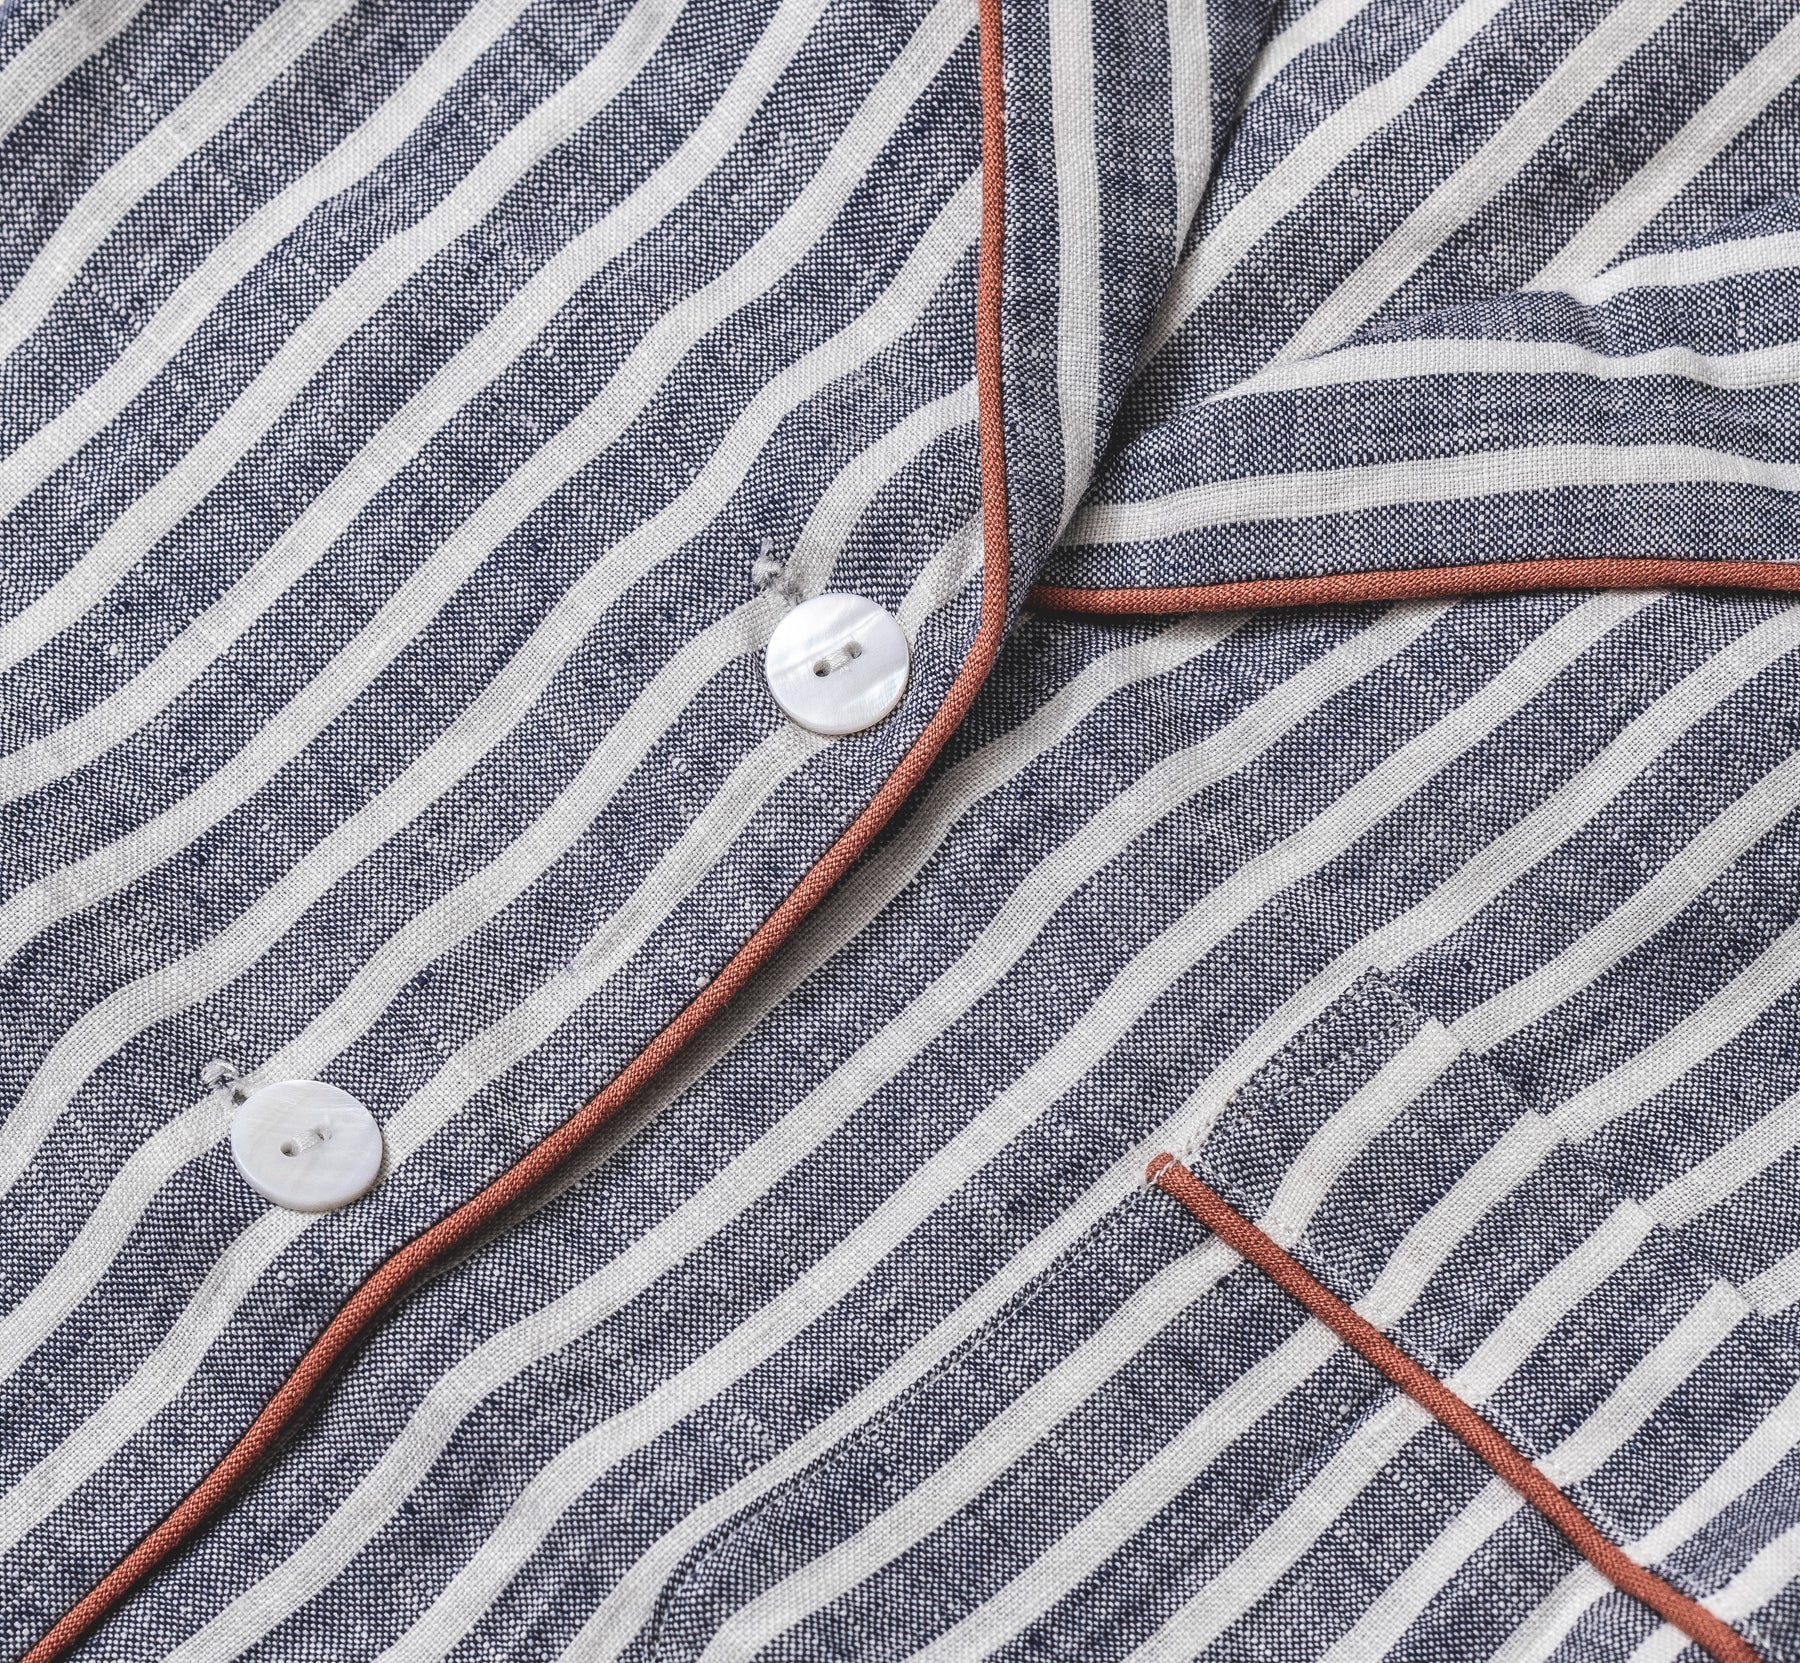 Midnight Stripe Linen Night Shirt - Piglet in Bed